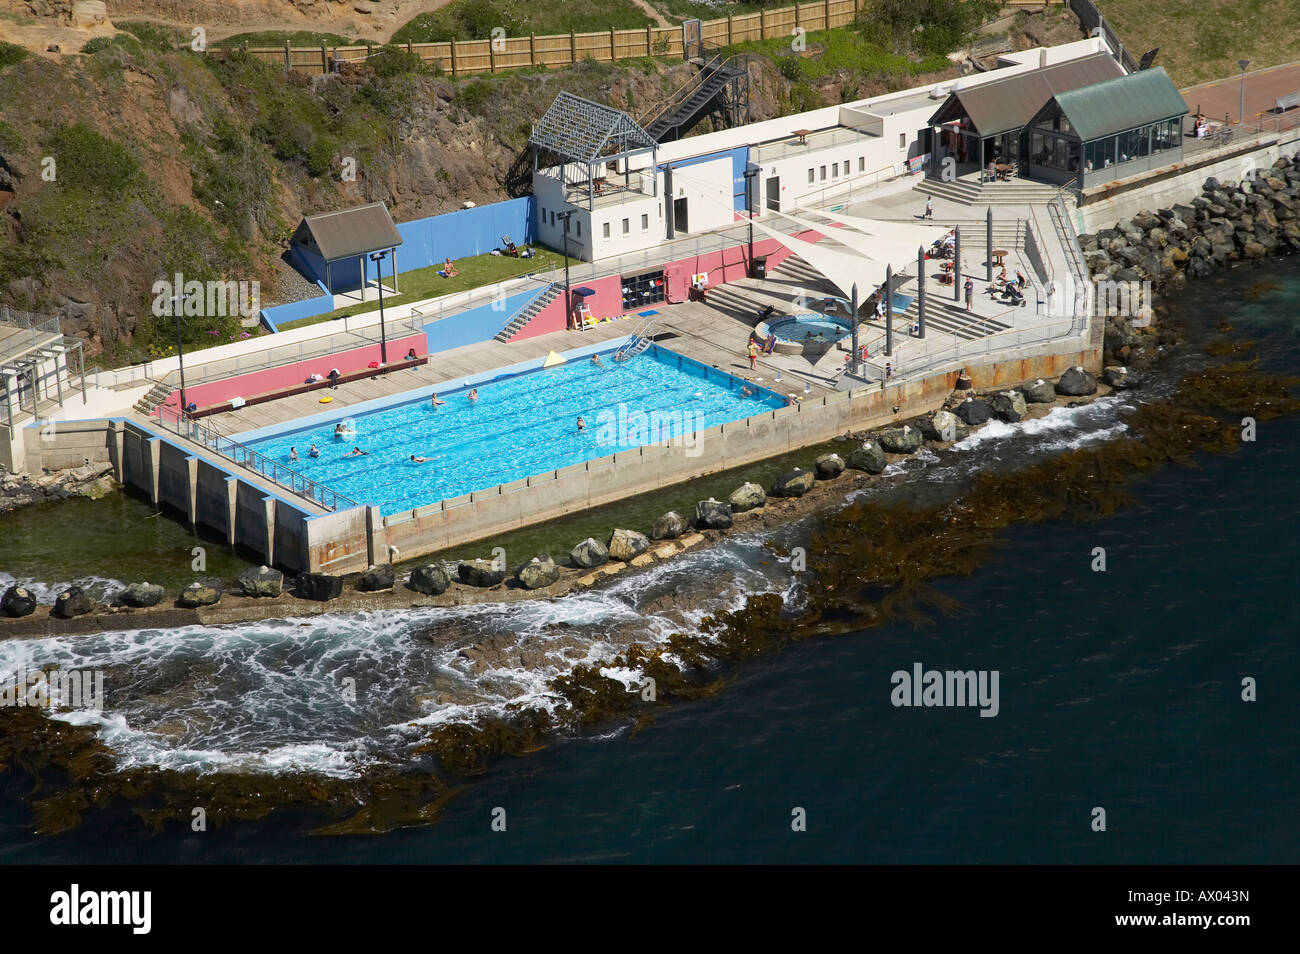 St Clair Hot Salt Water Pool Dunedin Südinsel New Zealand Antenne Stockfoto